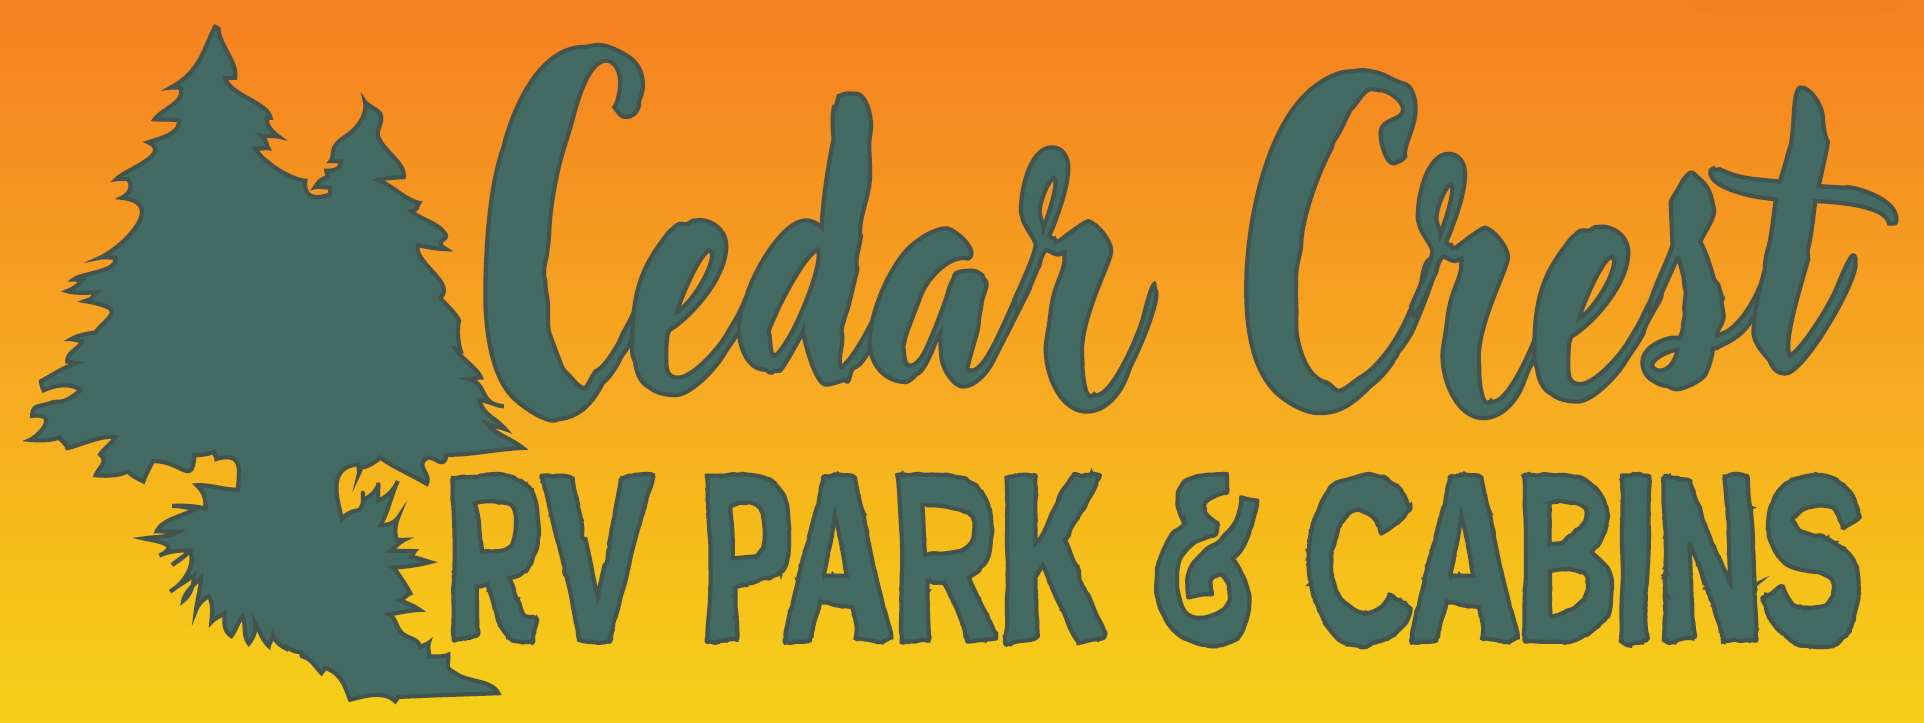 Cedar Crest RV Park Updated Logo